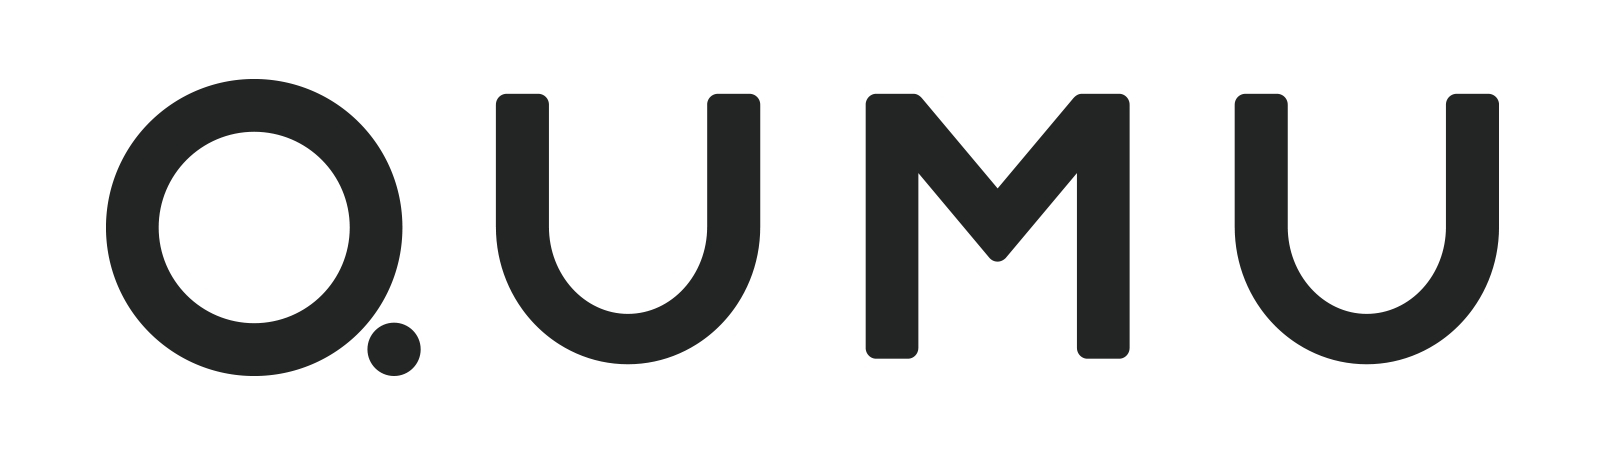 https://mms.businesswire.com/media/20210421005269/en/872964/5/qumu-logo-padded.jpg 